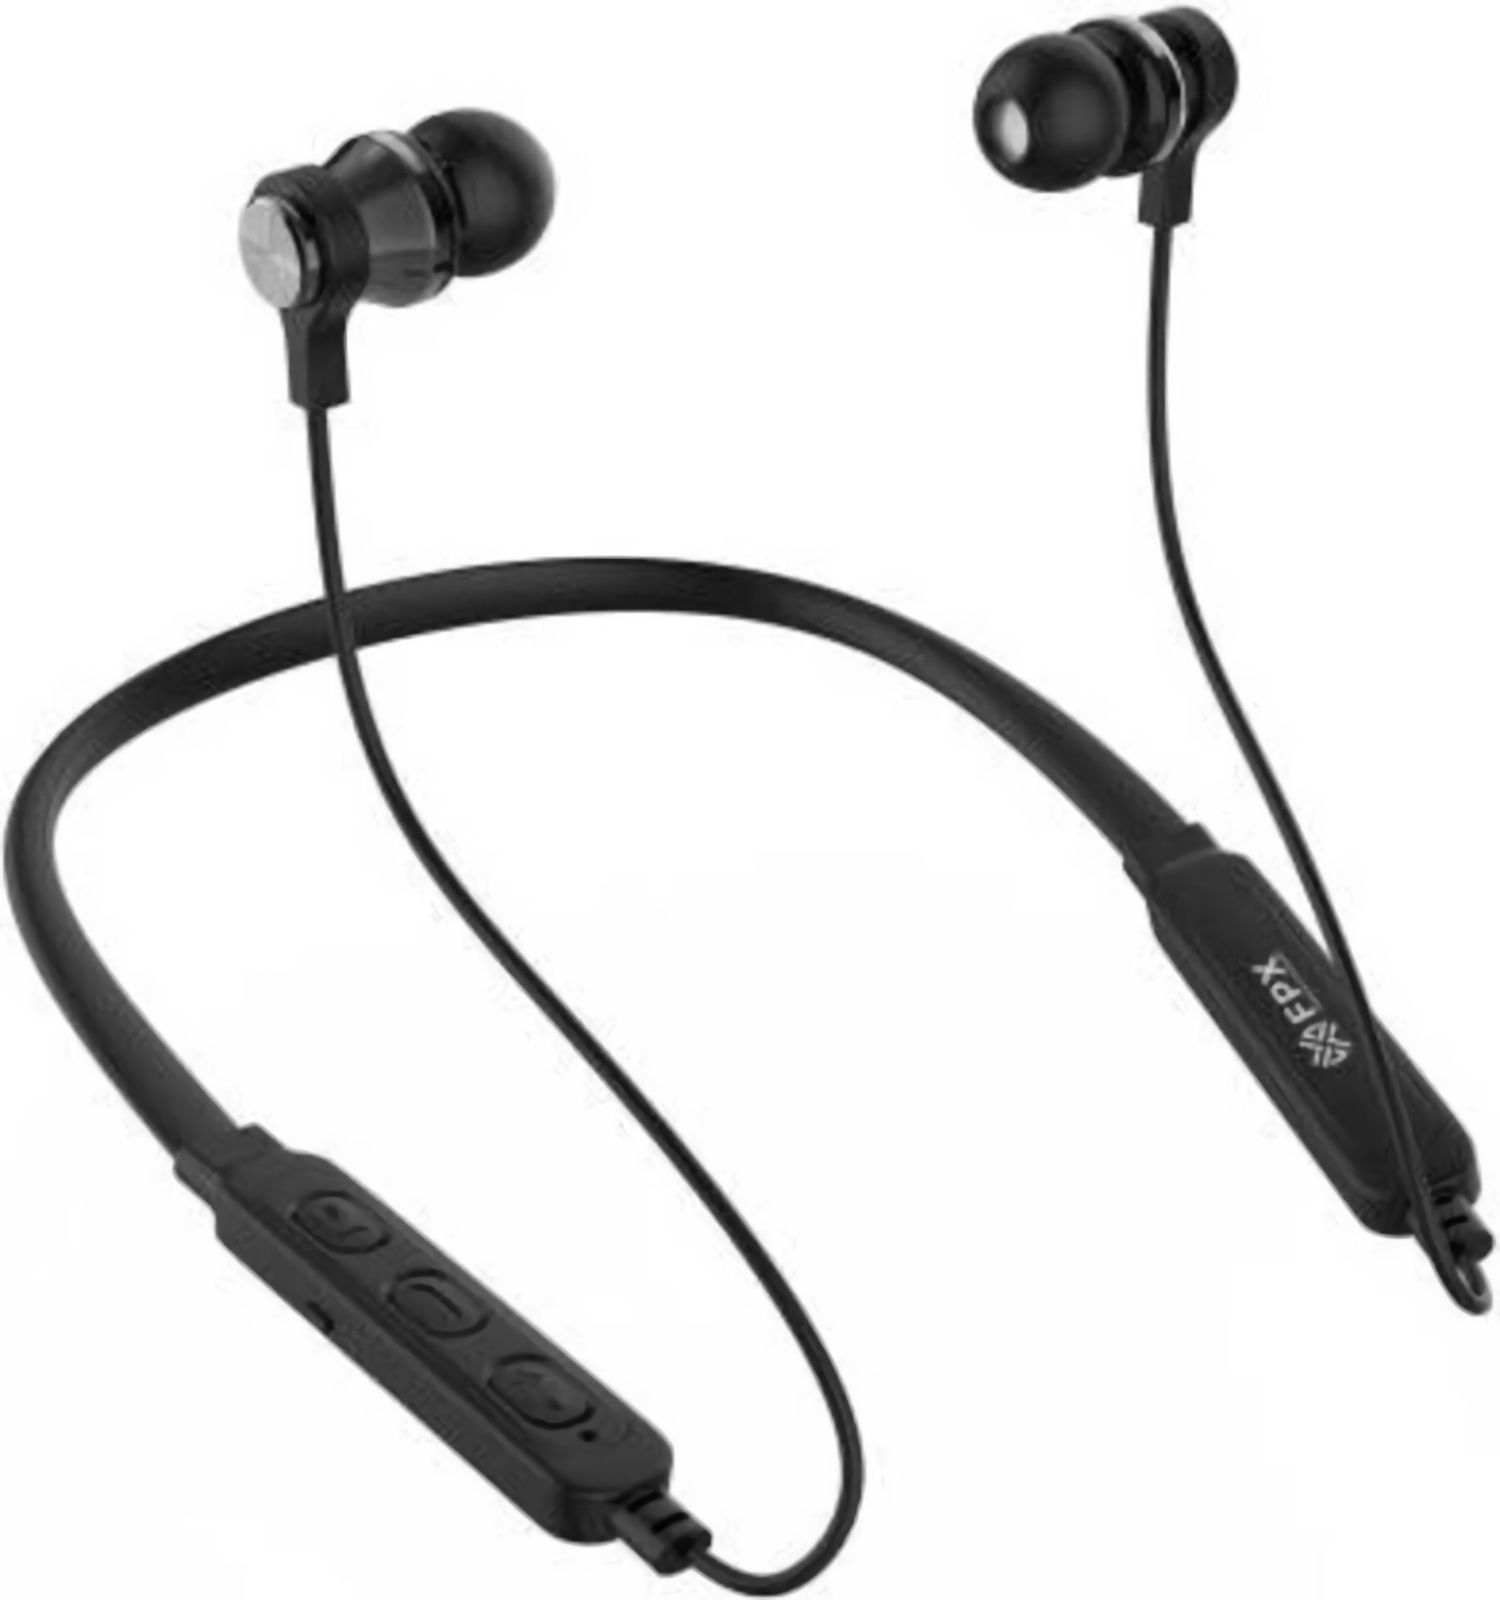 Betroniks ATLAS Neckband Wireless With Mic Headphones/Earphones Black